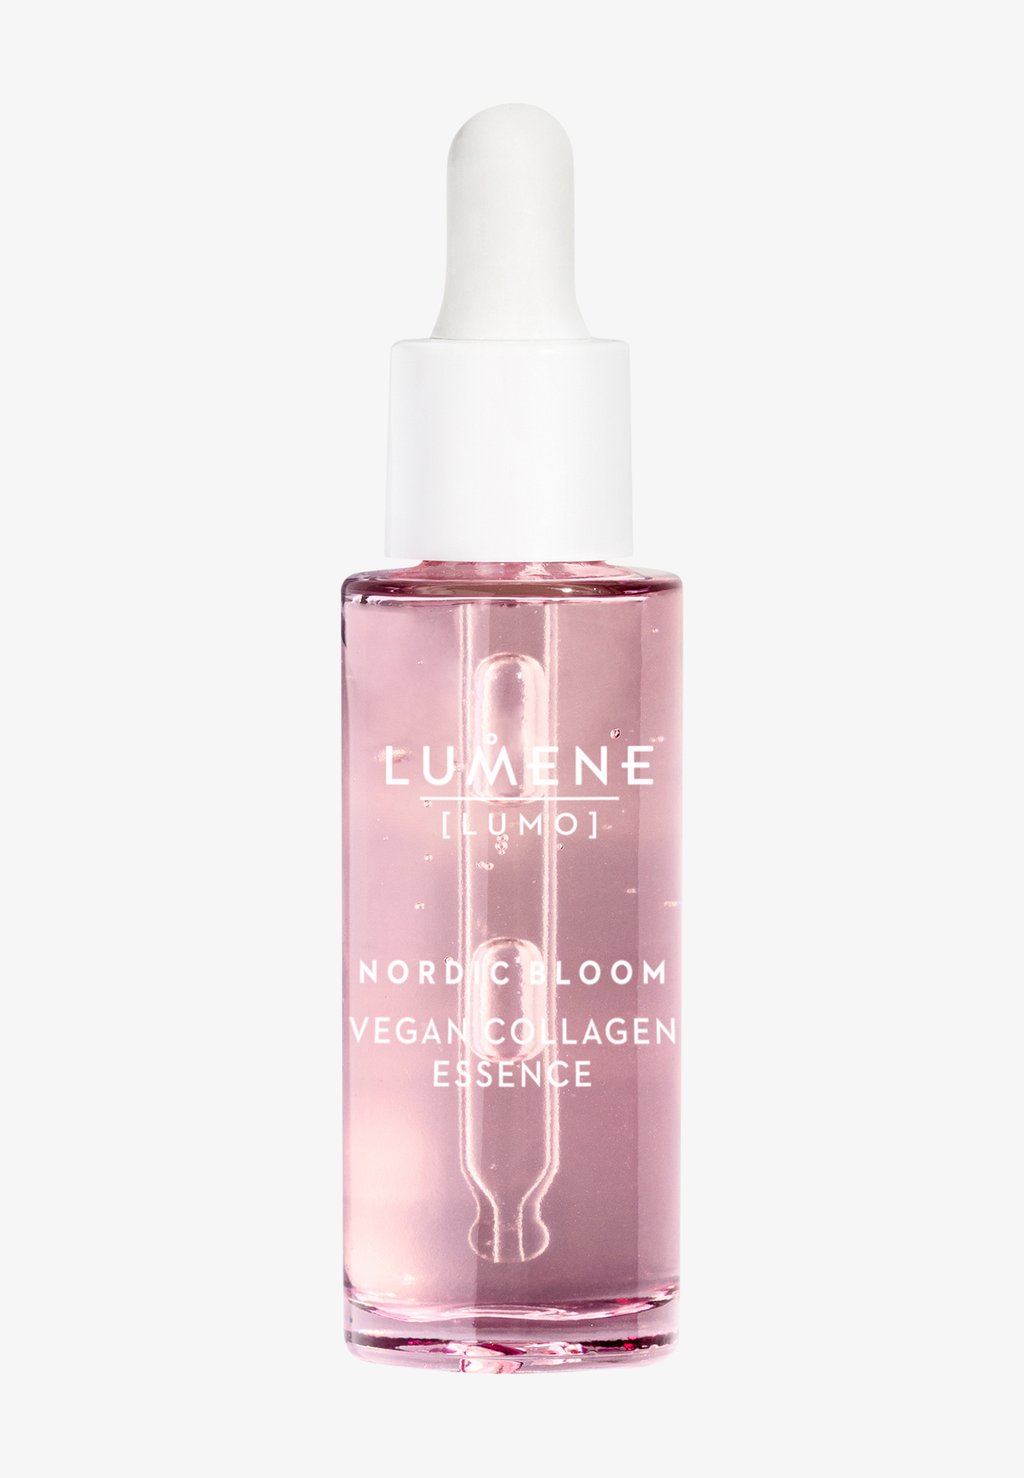 Сыворотка Nordic Bloom [Lumo] Vegan Collagen Essence Lumene бальзам essence volumizing collagen vegan 3 5 гр